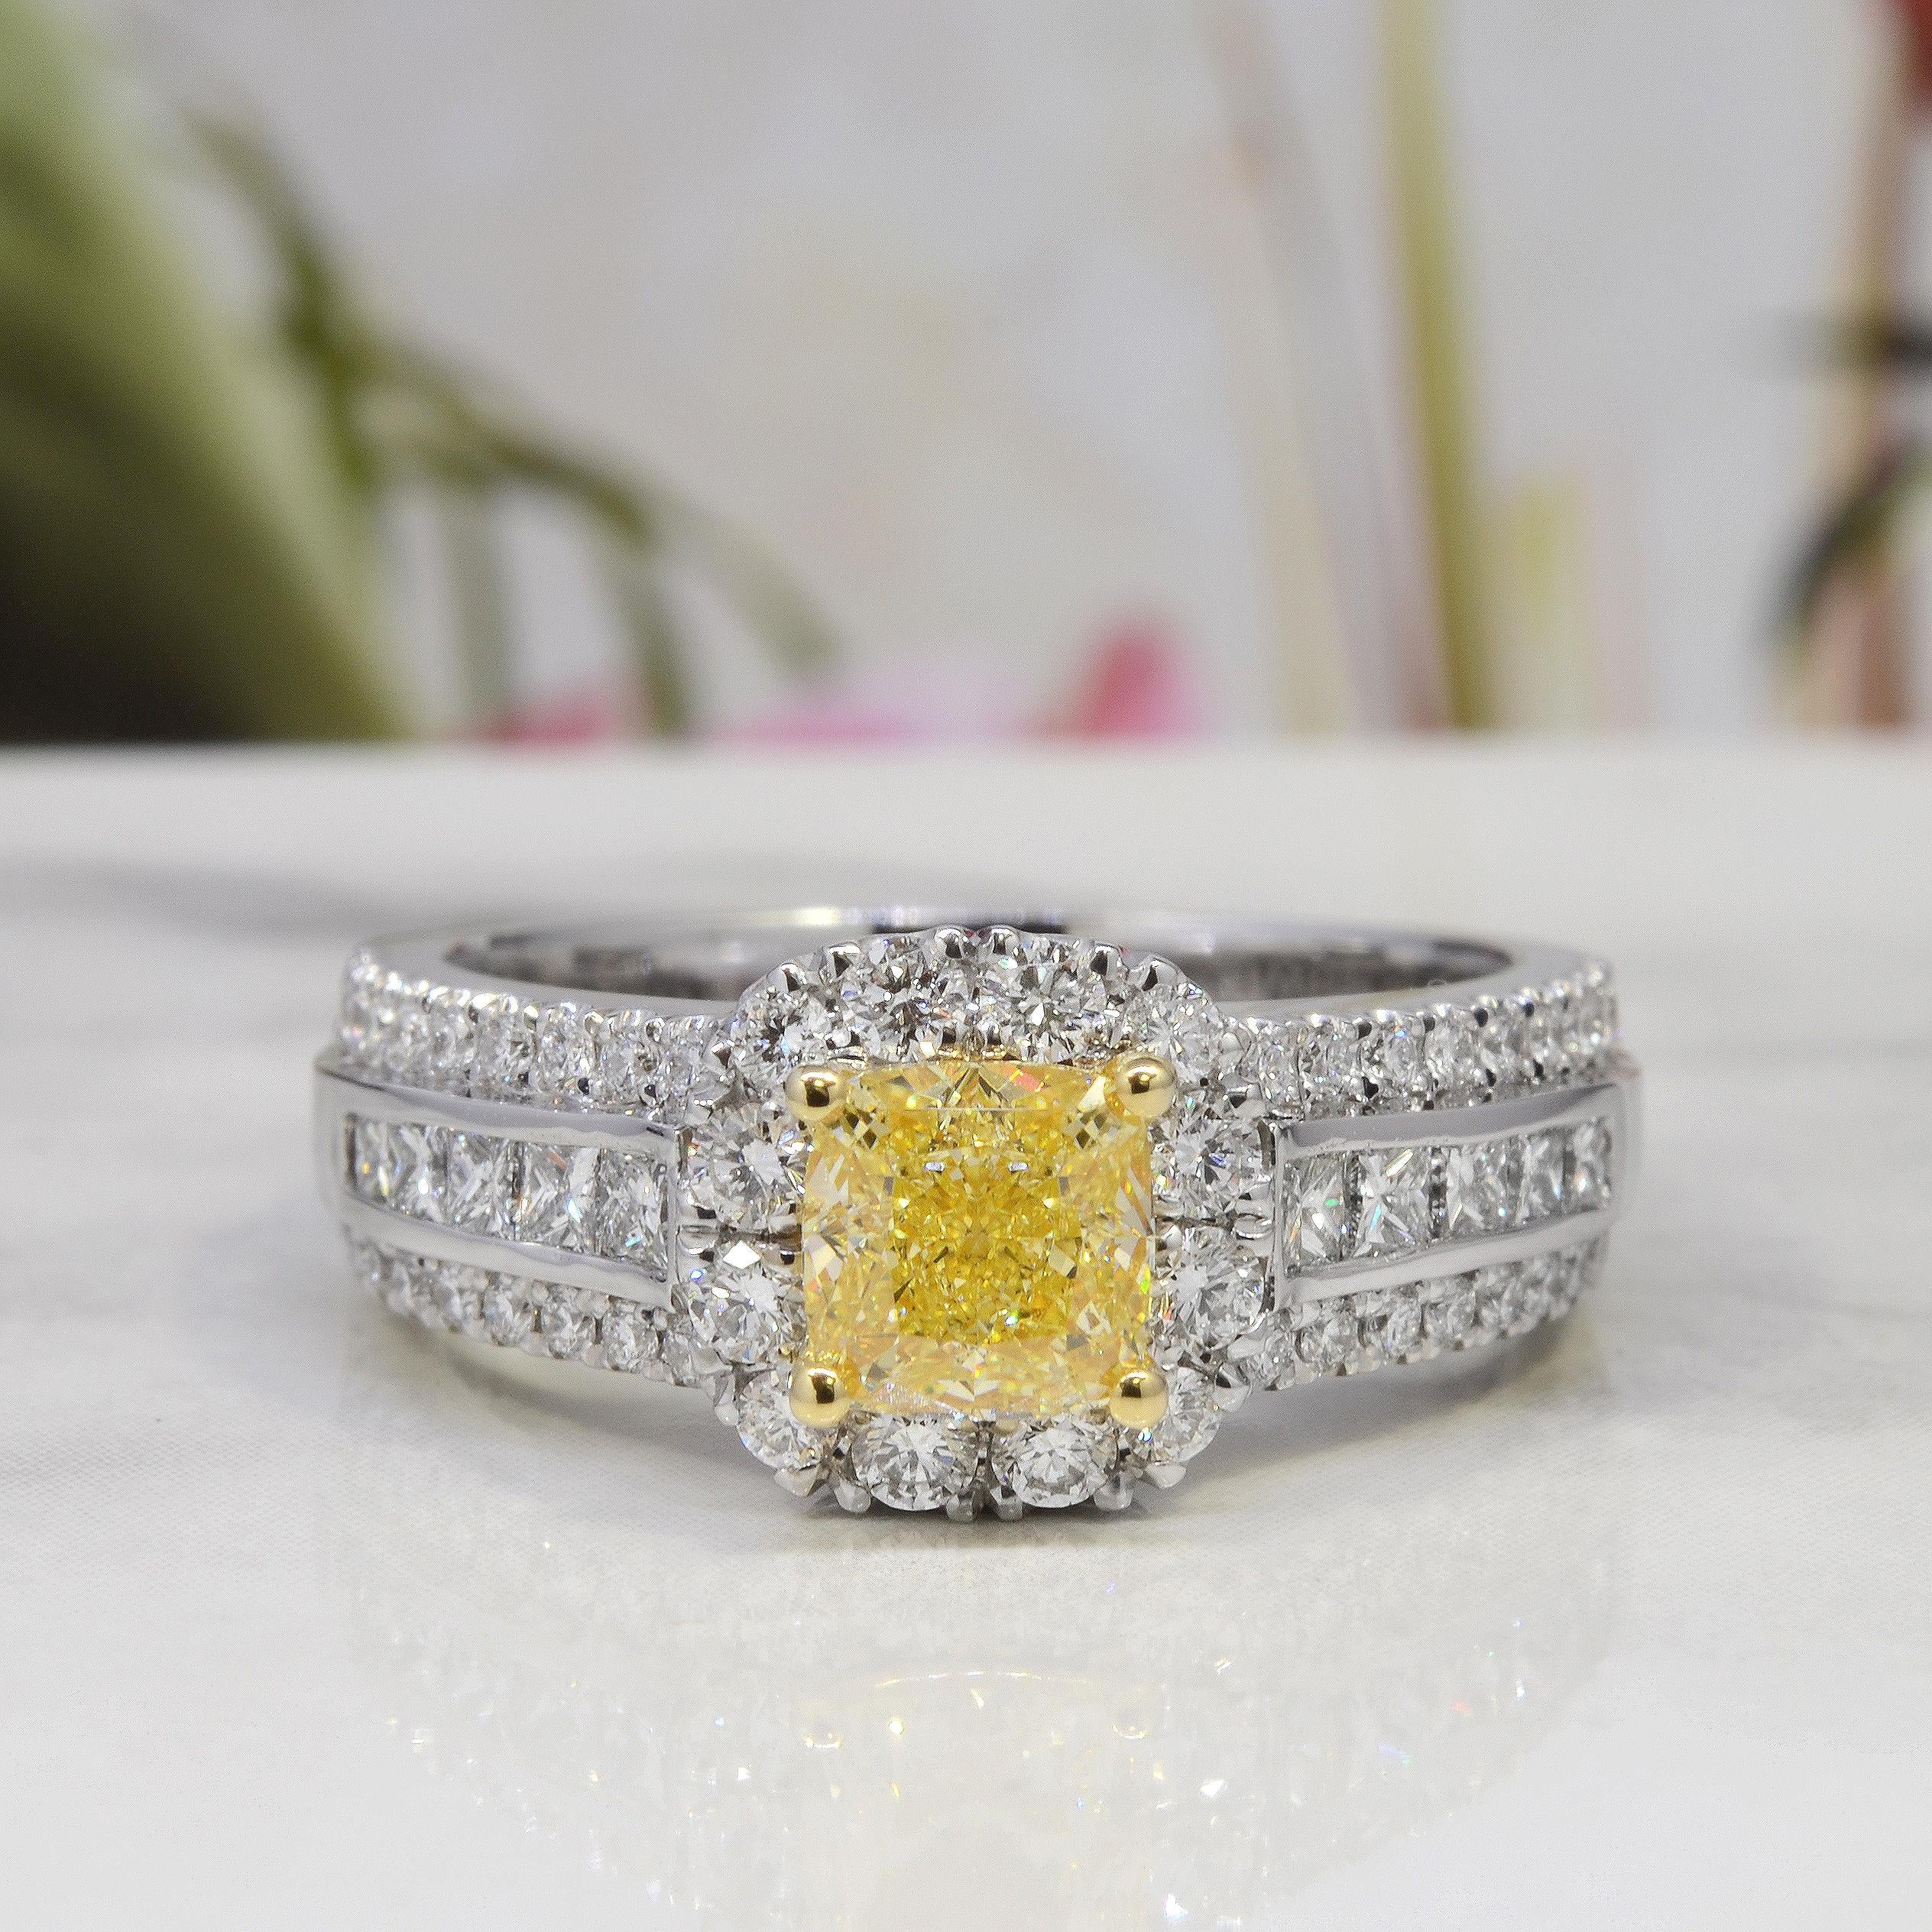 Women's or Men's 1.85 Ct. Canary Fancy Yellow Cushion Cut Diamond Ring VS2 GIA Certified For Sale